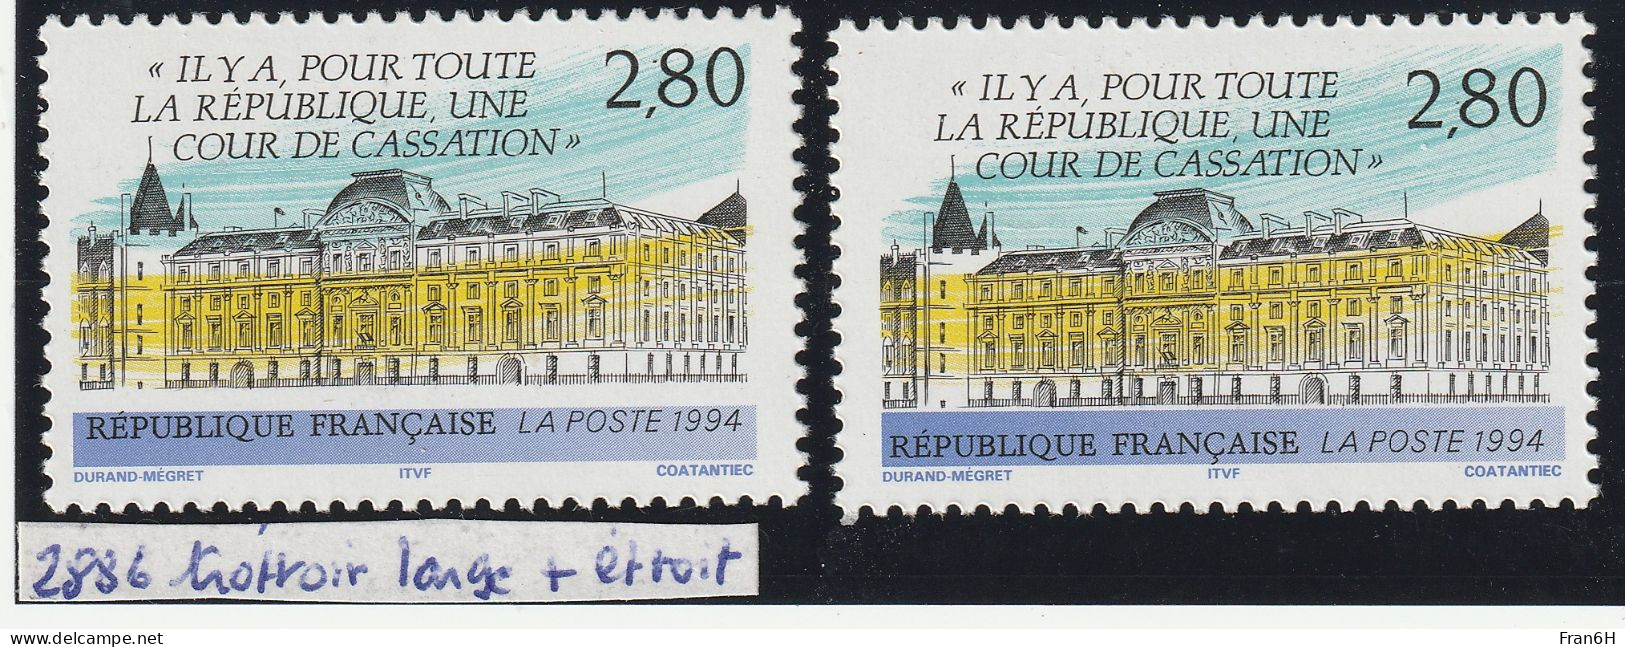 YT N° 2886 - Trootoir Large + étroit - Neufs ** - MNH - Unused Stamps